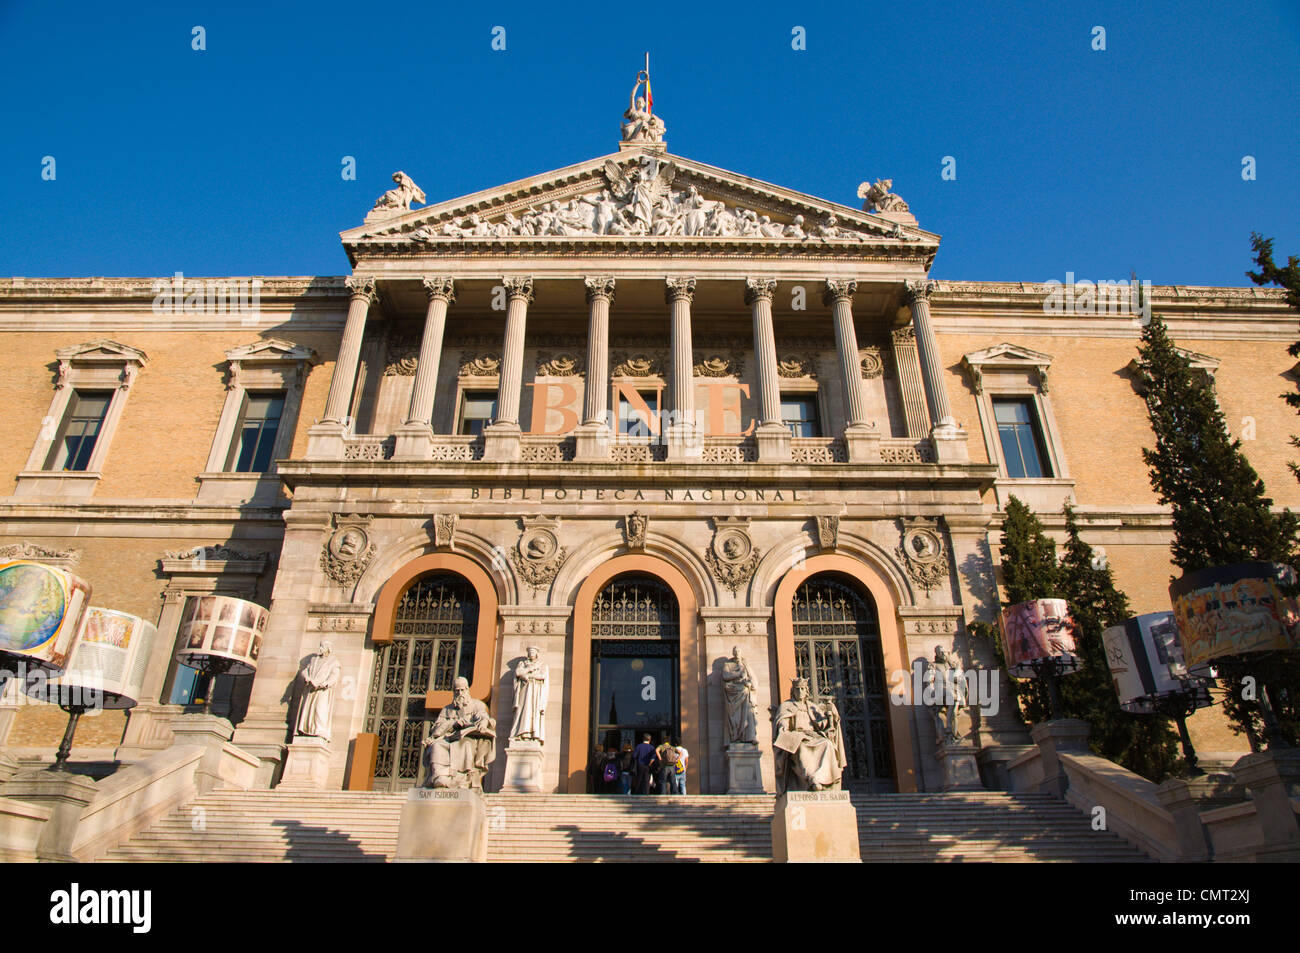 Biblioteca Nacional de Espana bibliothèque nationale de Madrid Espagne Europe centrale Banque D'Images